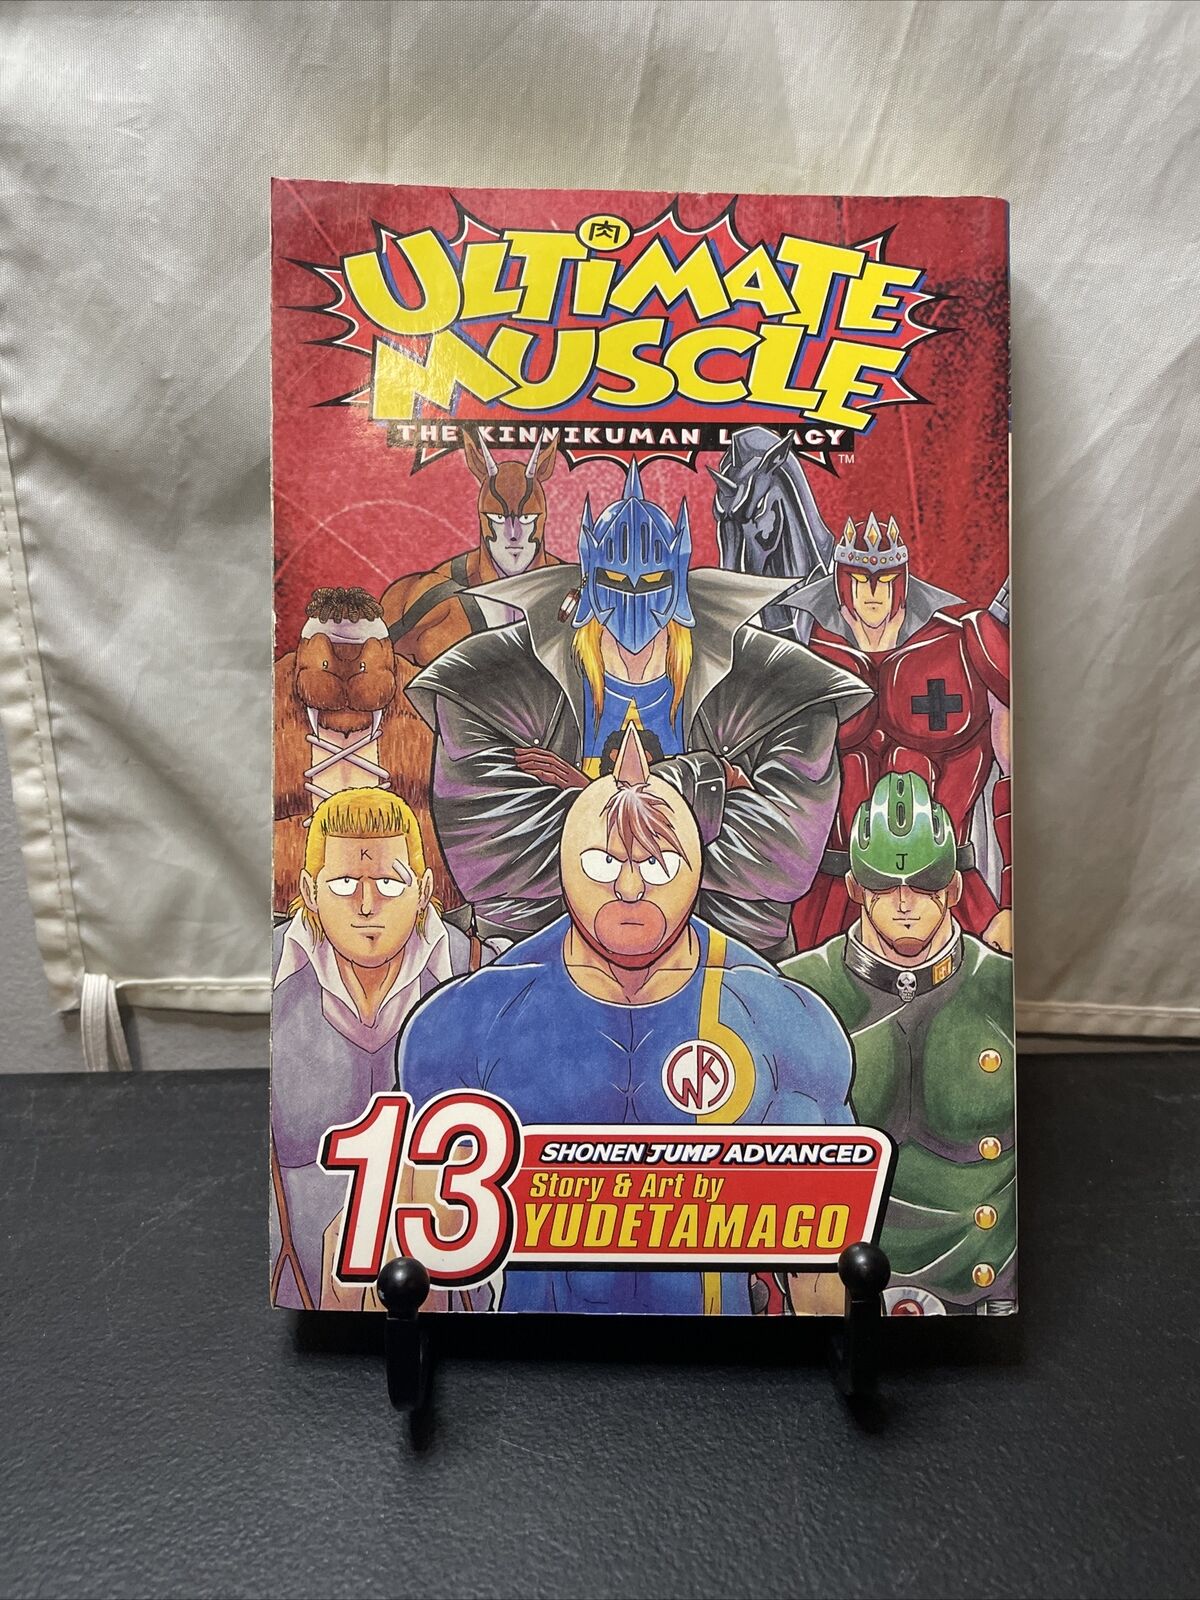 Ultimate Muscle Vol 13 1st printing Kinnikuman Legacy Shonen Jump comics vg